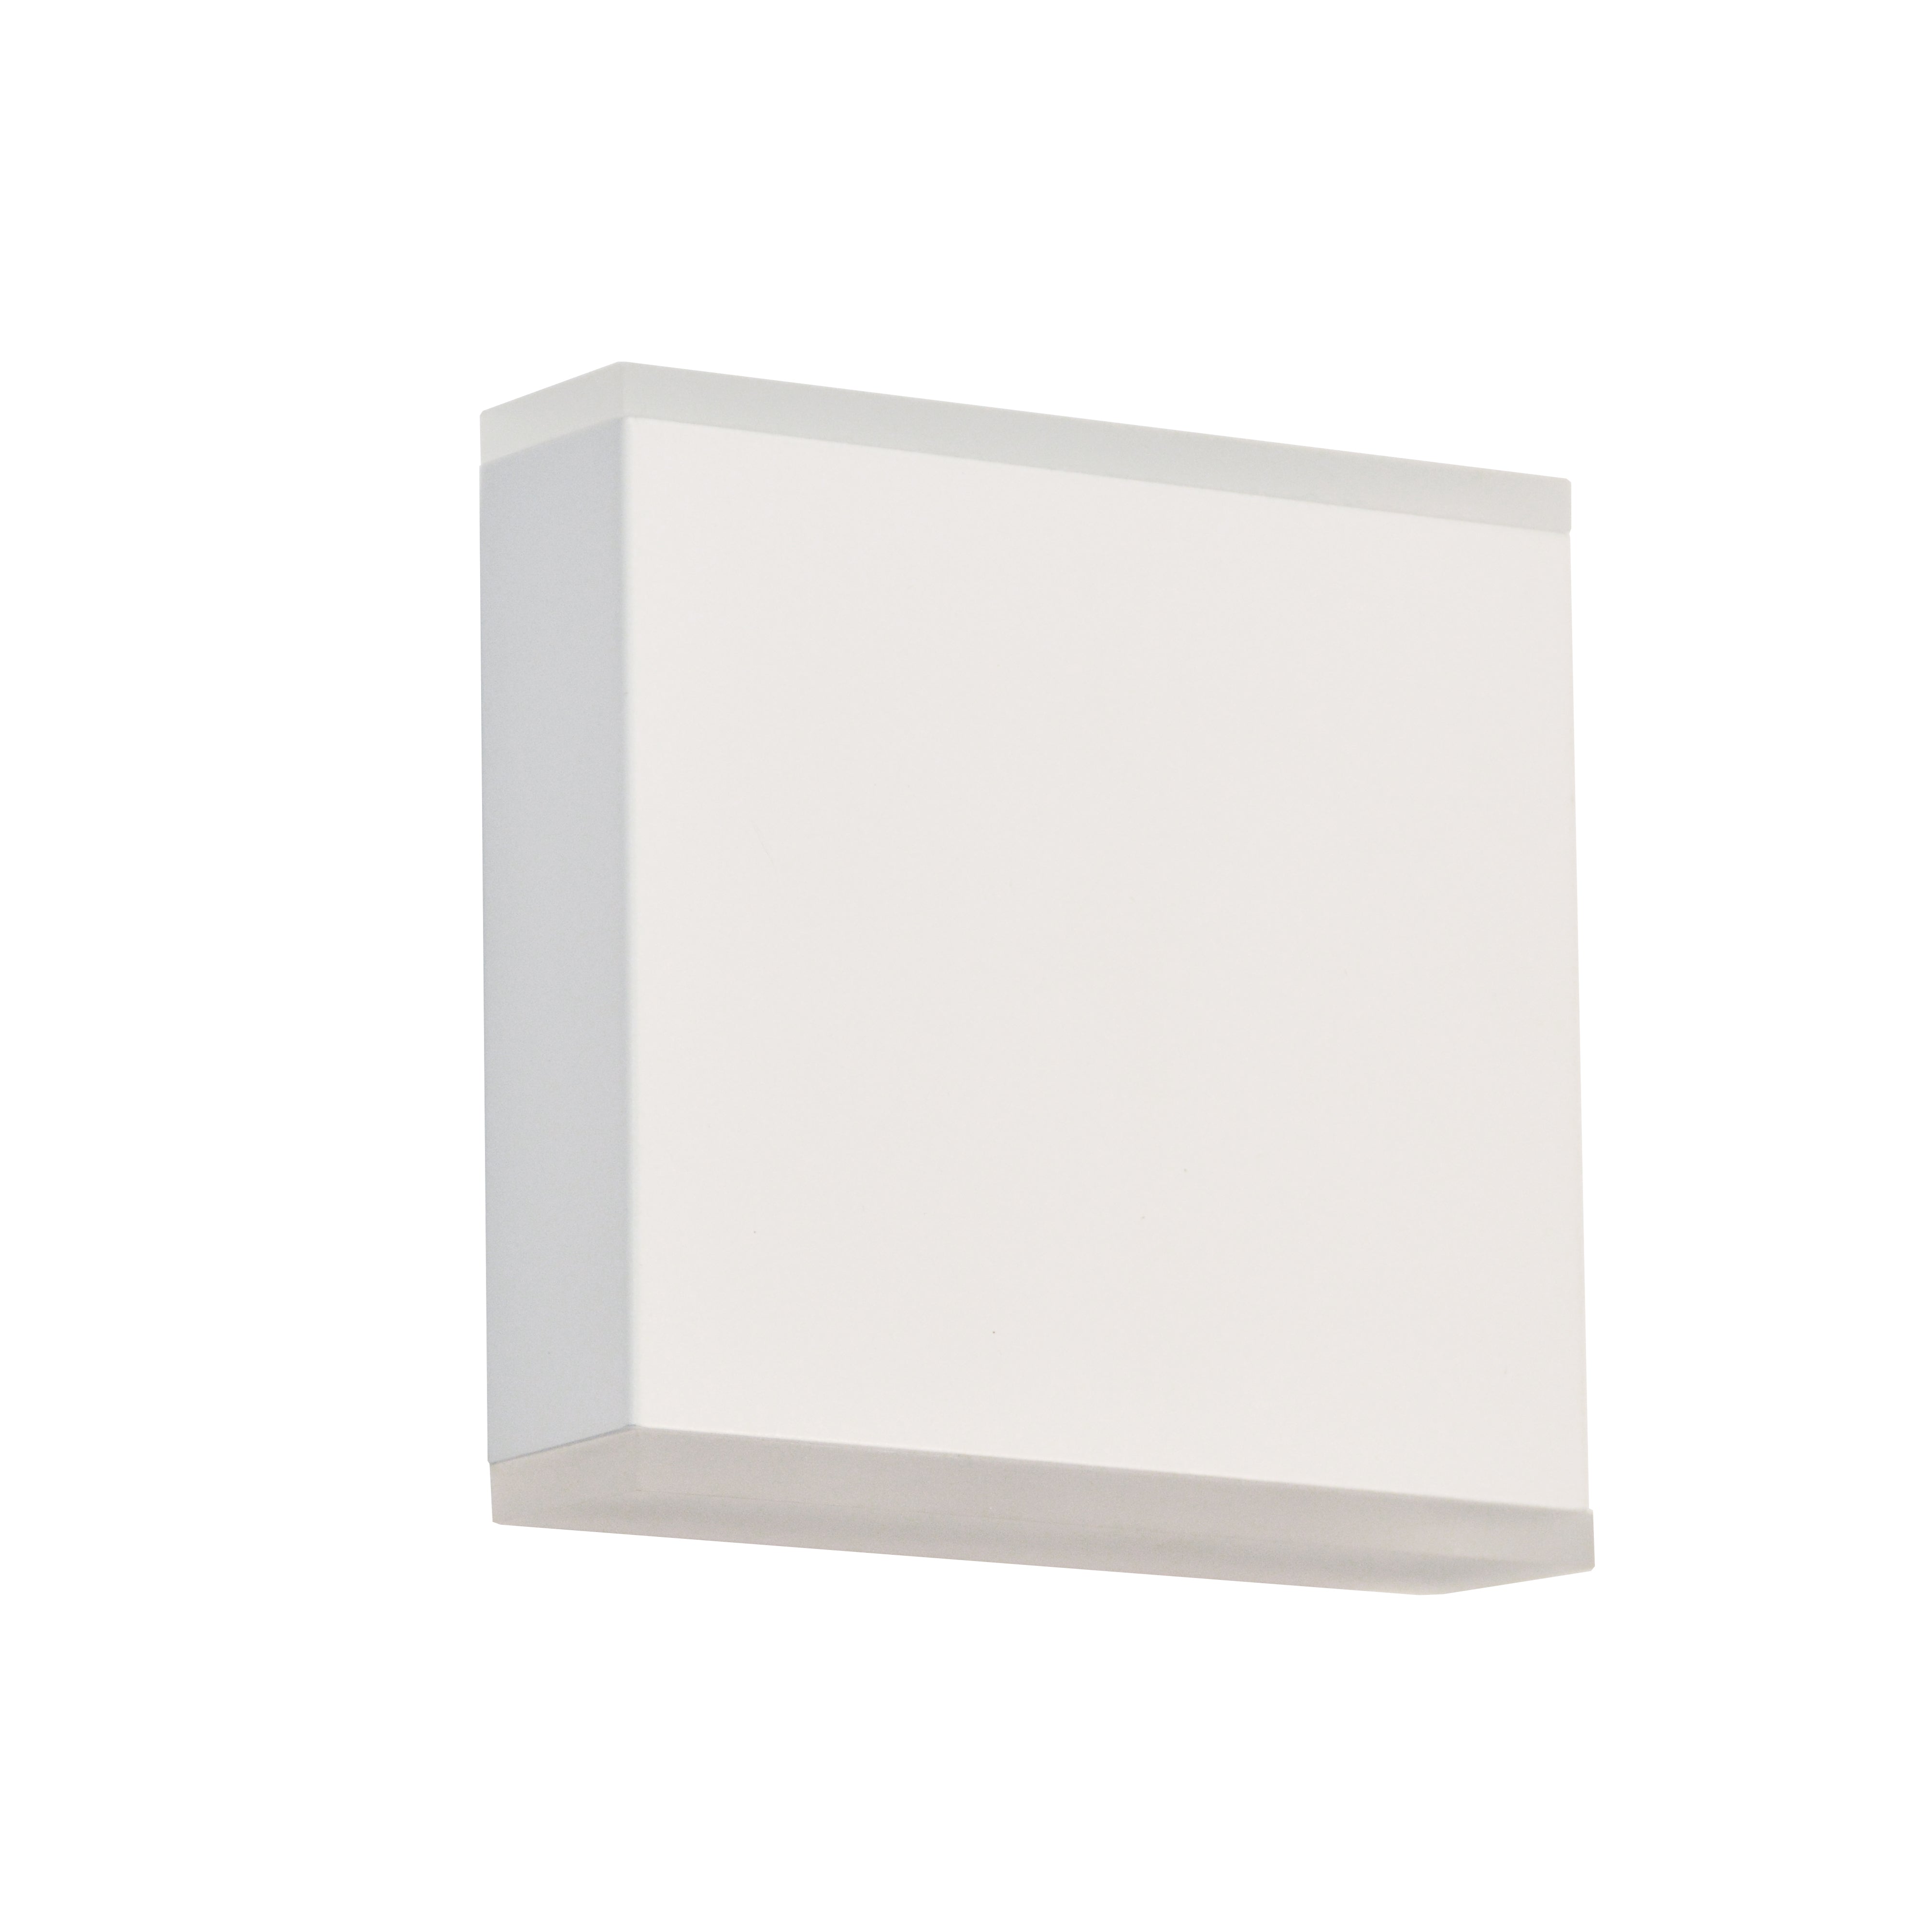 EMERY Wall sconce White INTEGRATED LED - EMY-550-5W-MW | DAINOLITE